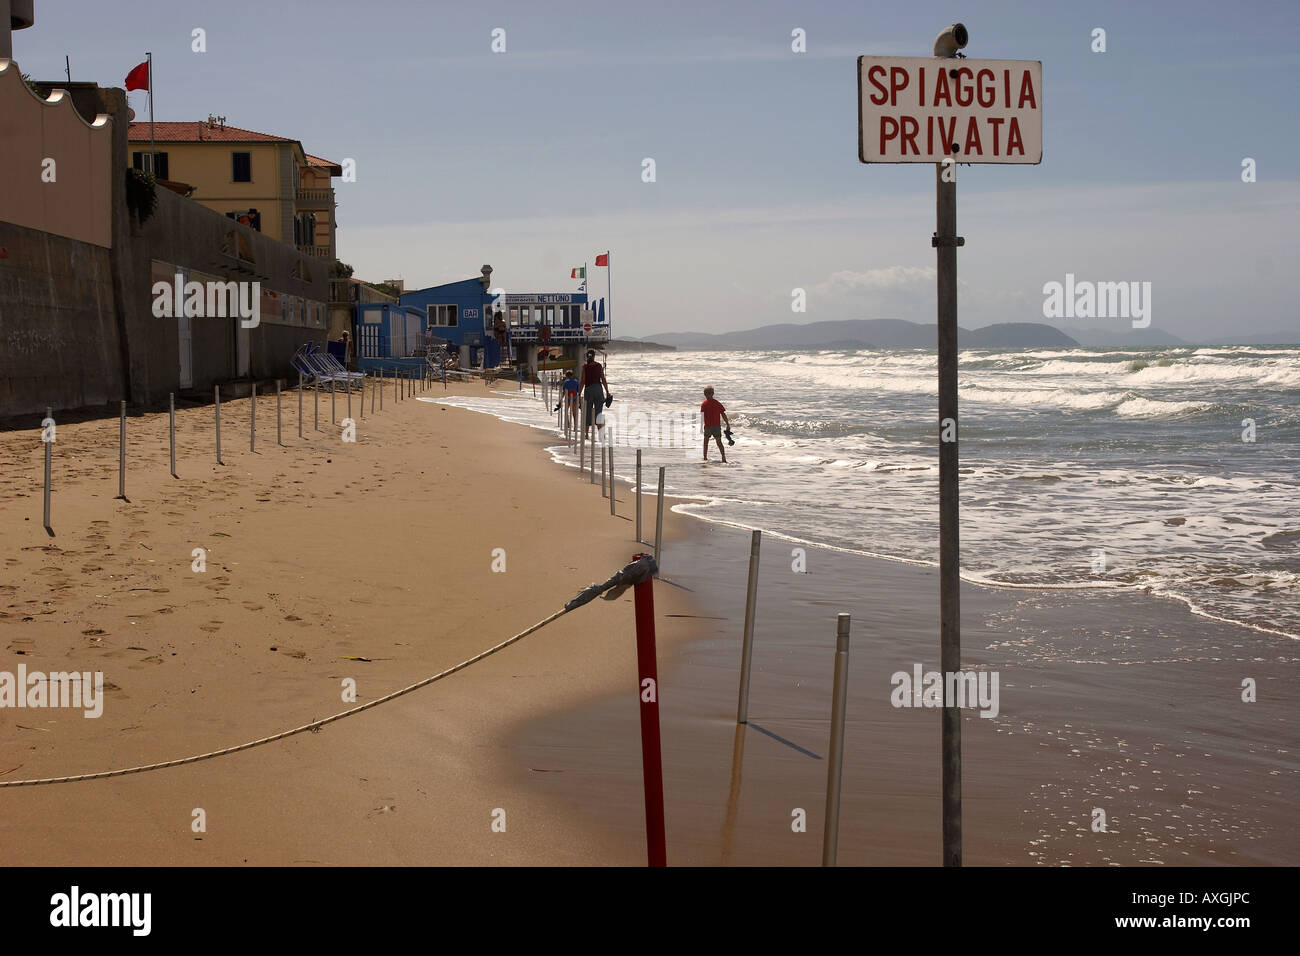 Spiaggia Privata, Private Beach sign on a, St Vincenzo Tuscany Stock Photo